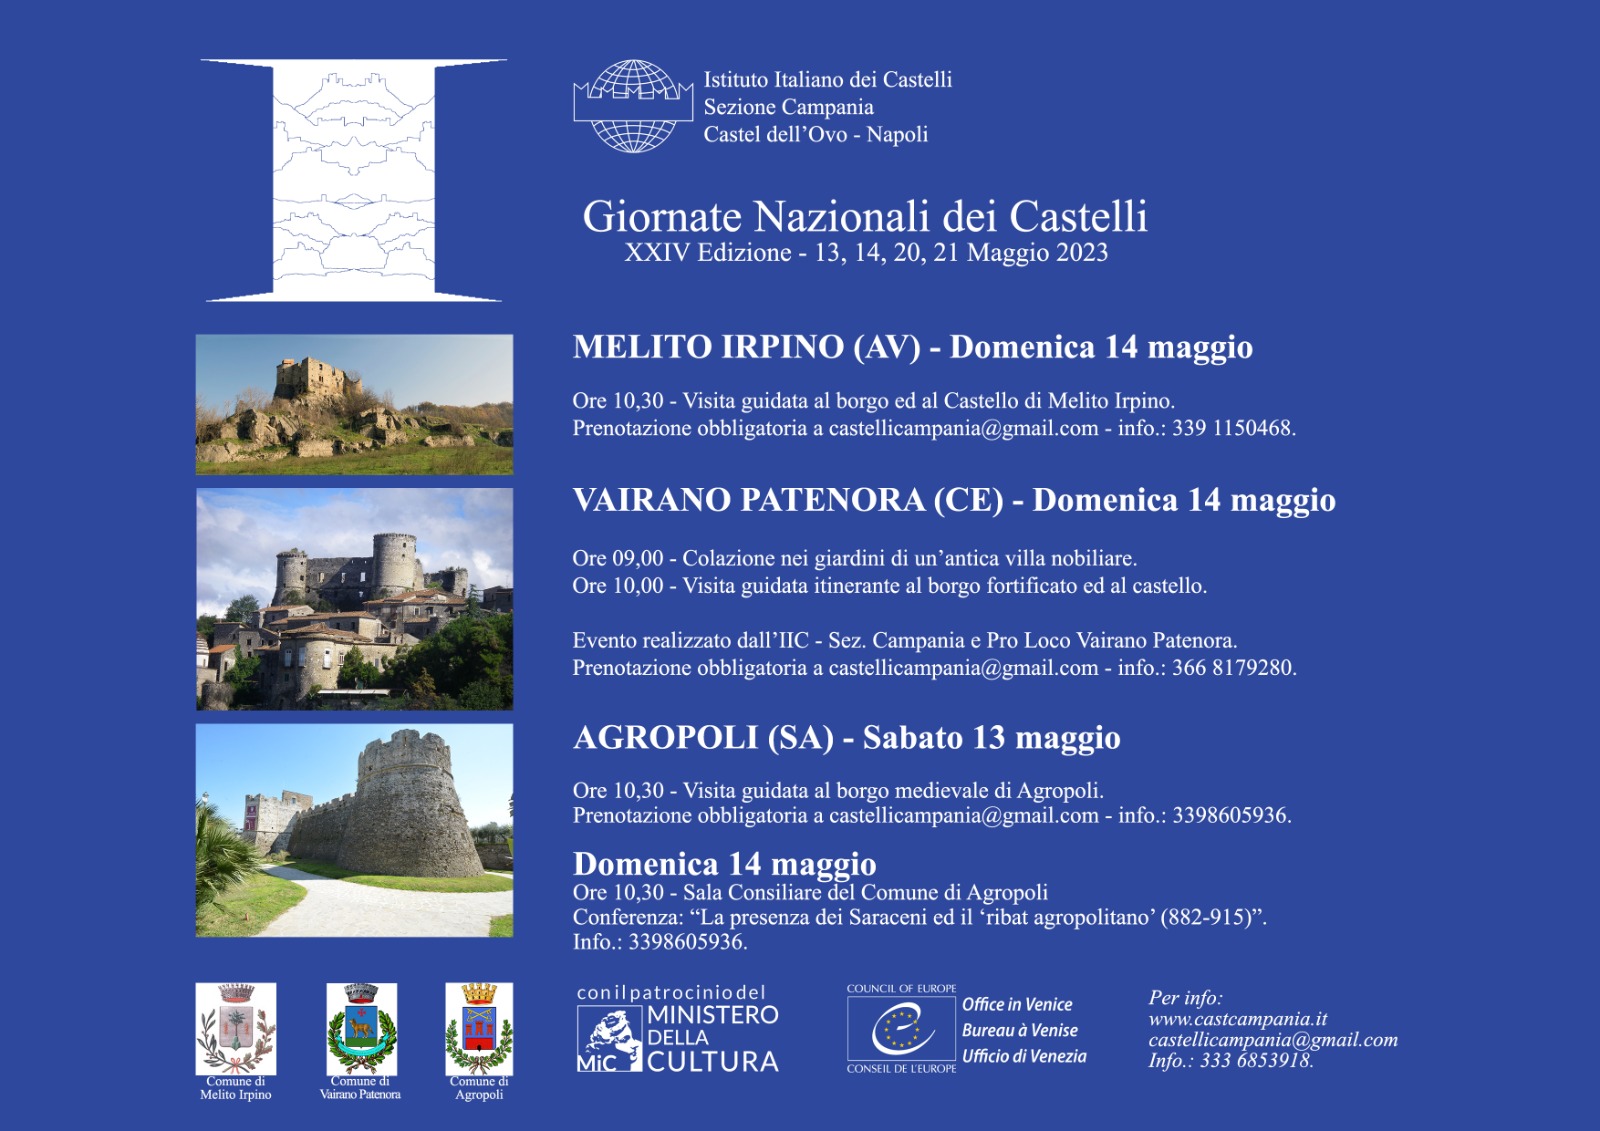 Giornate Nazionali dei Castelli 2023 – Melito Irpino (AV), Vairano Patenora (CE), Agropoli (SA)